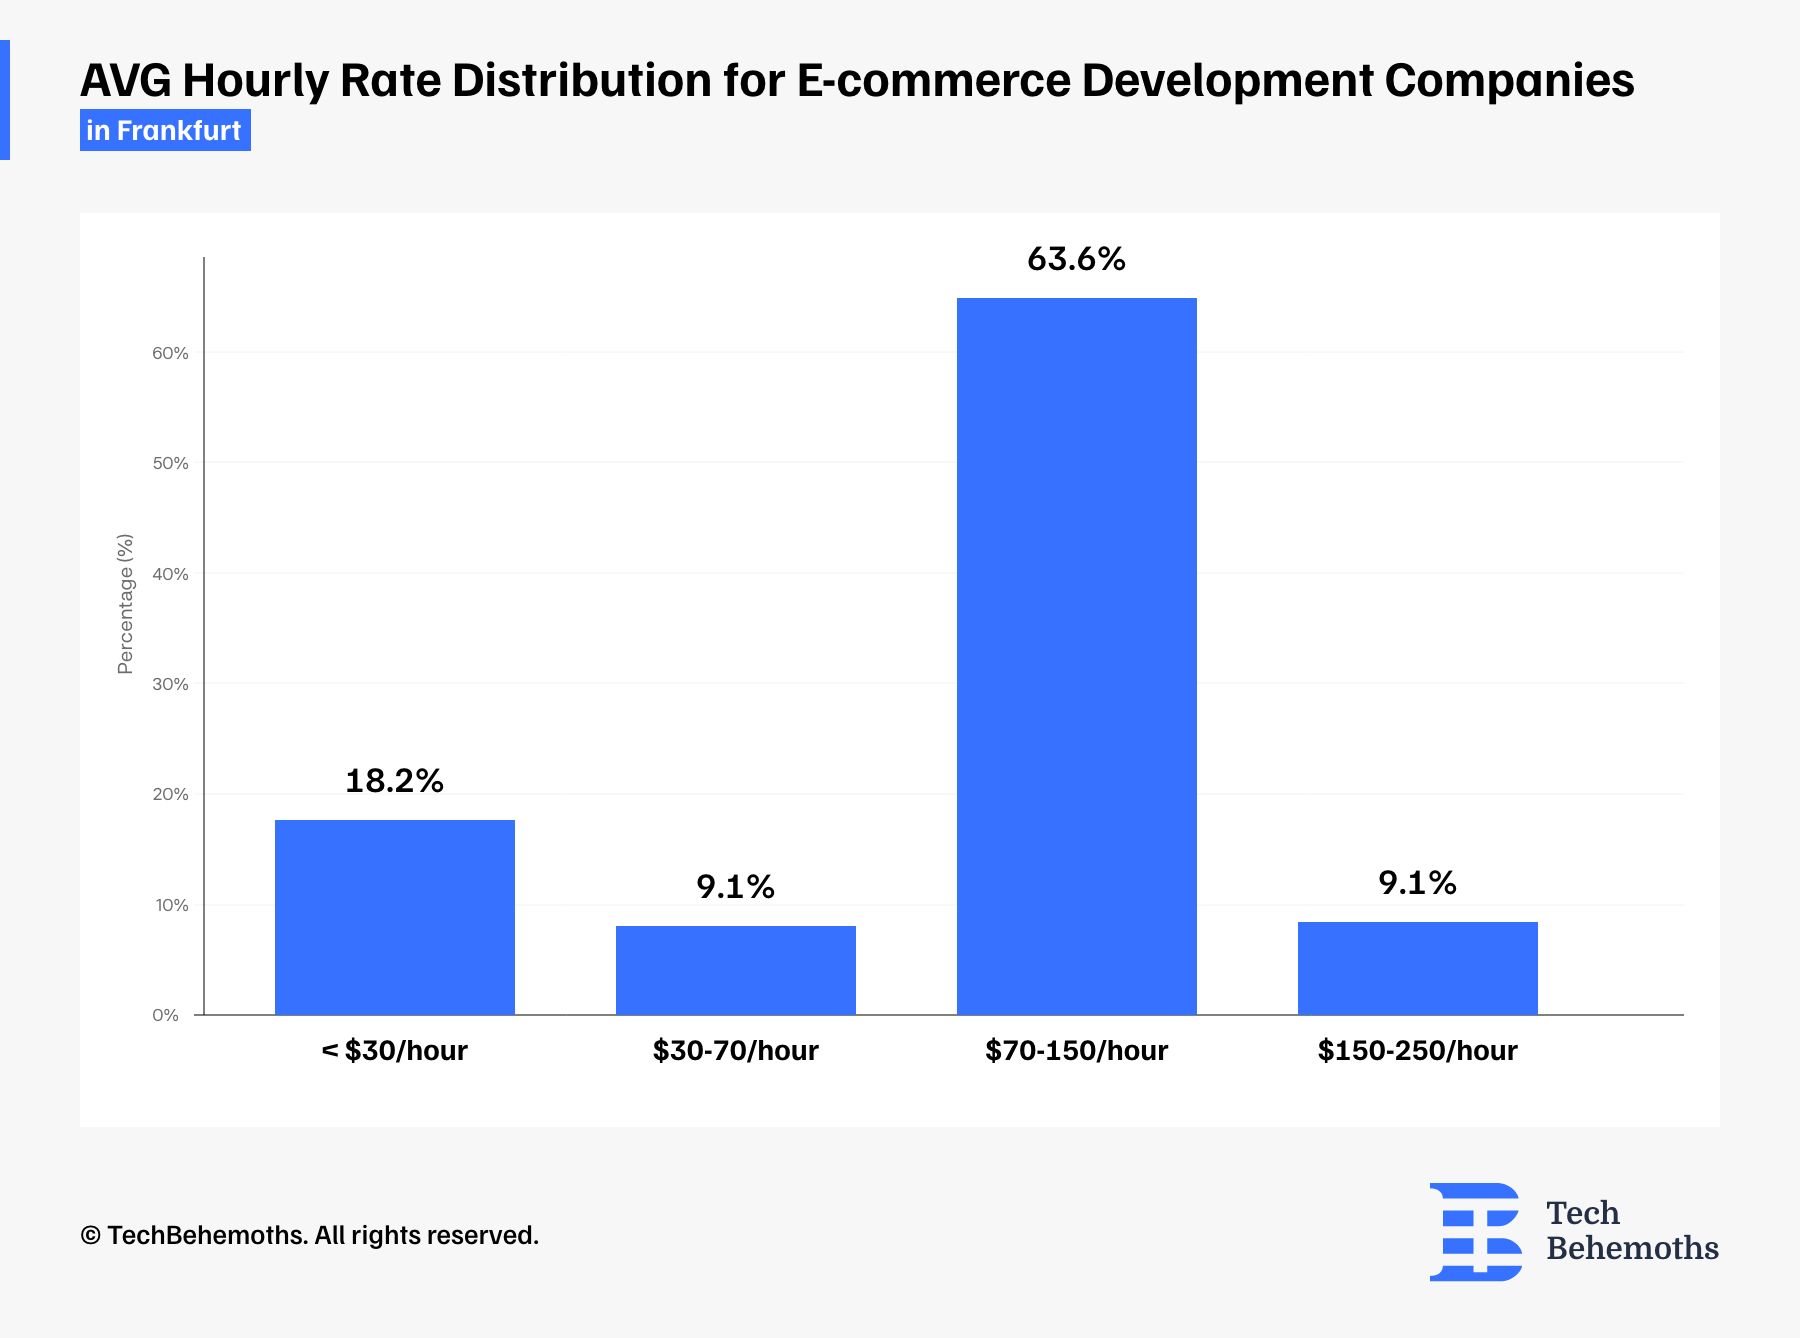 Average hourly rate distribution for E-commerce development companies in Frankfurt